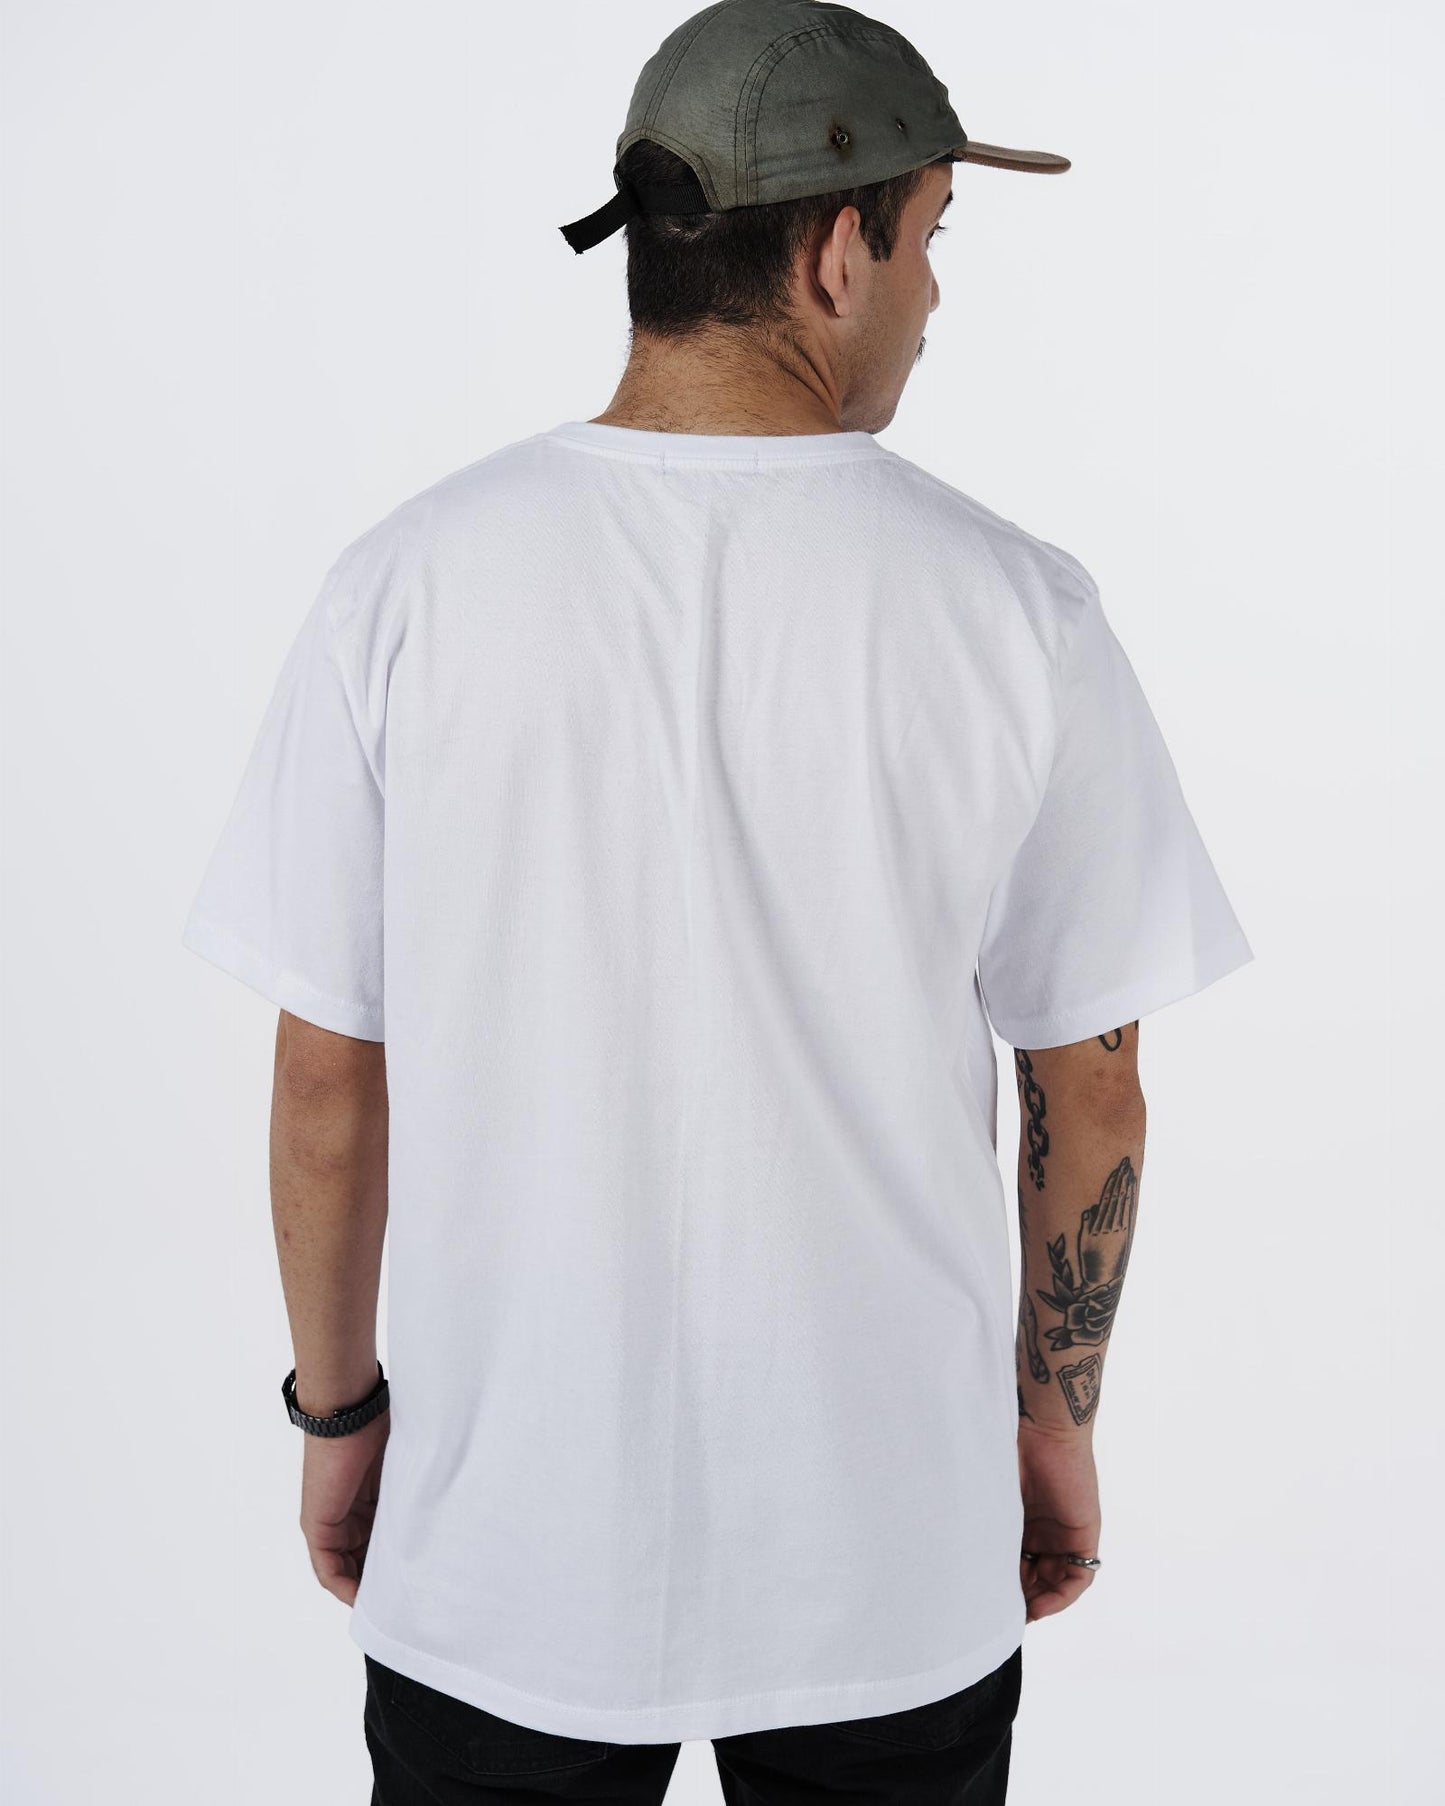 Printed T-Shirt - White Scorpion